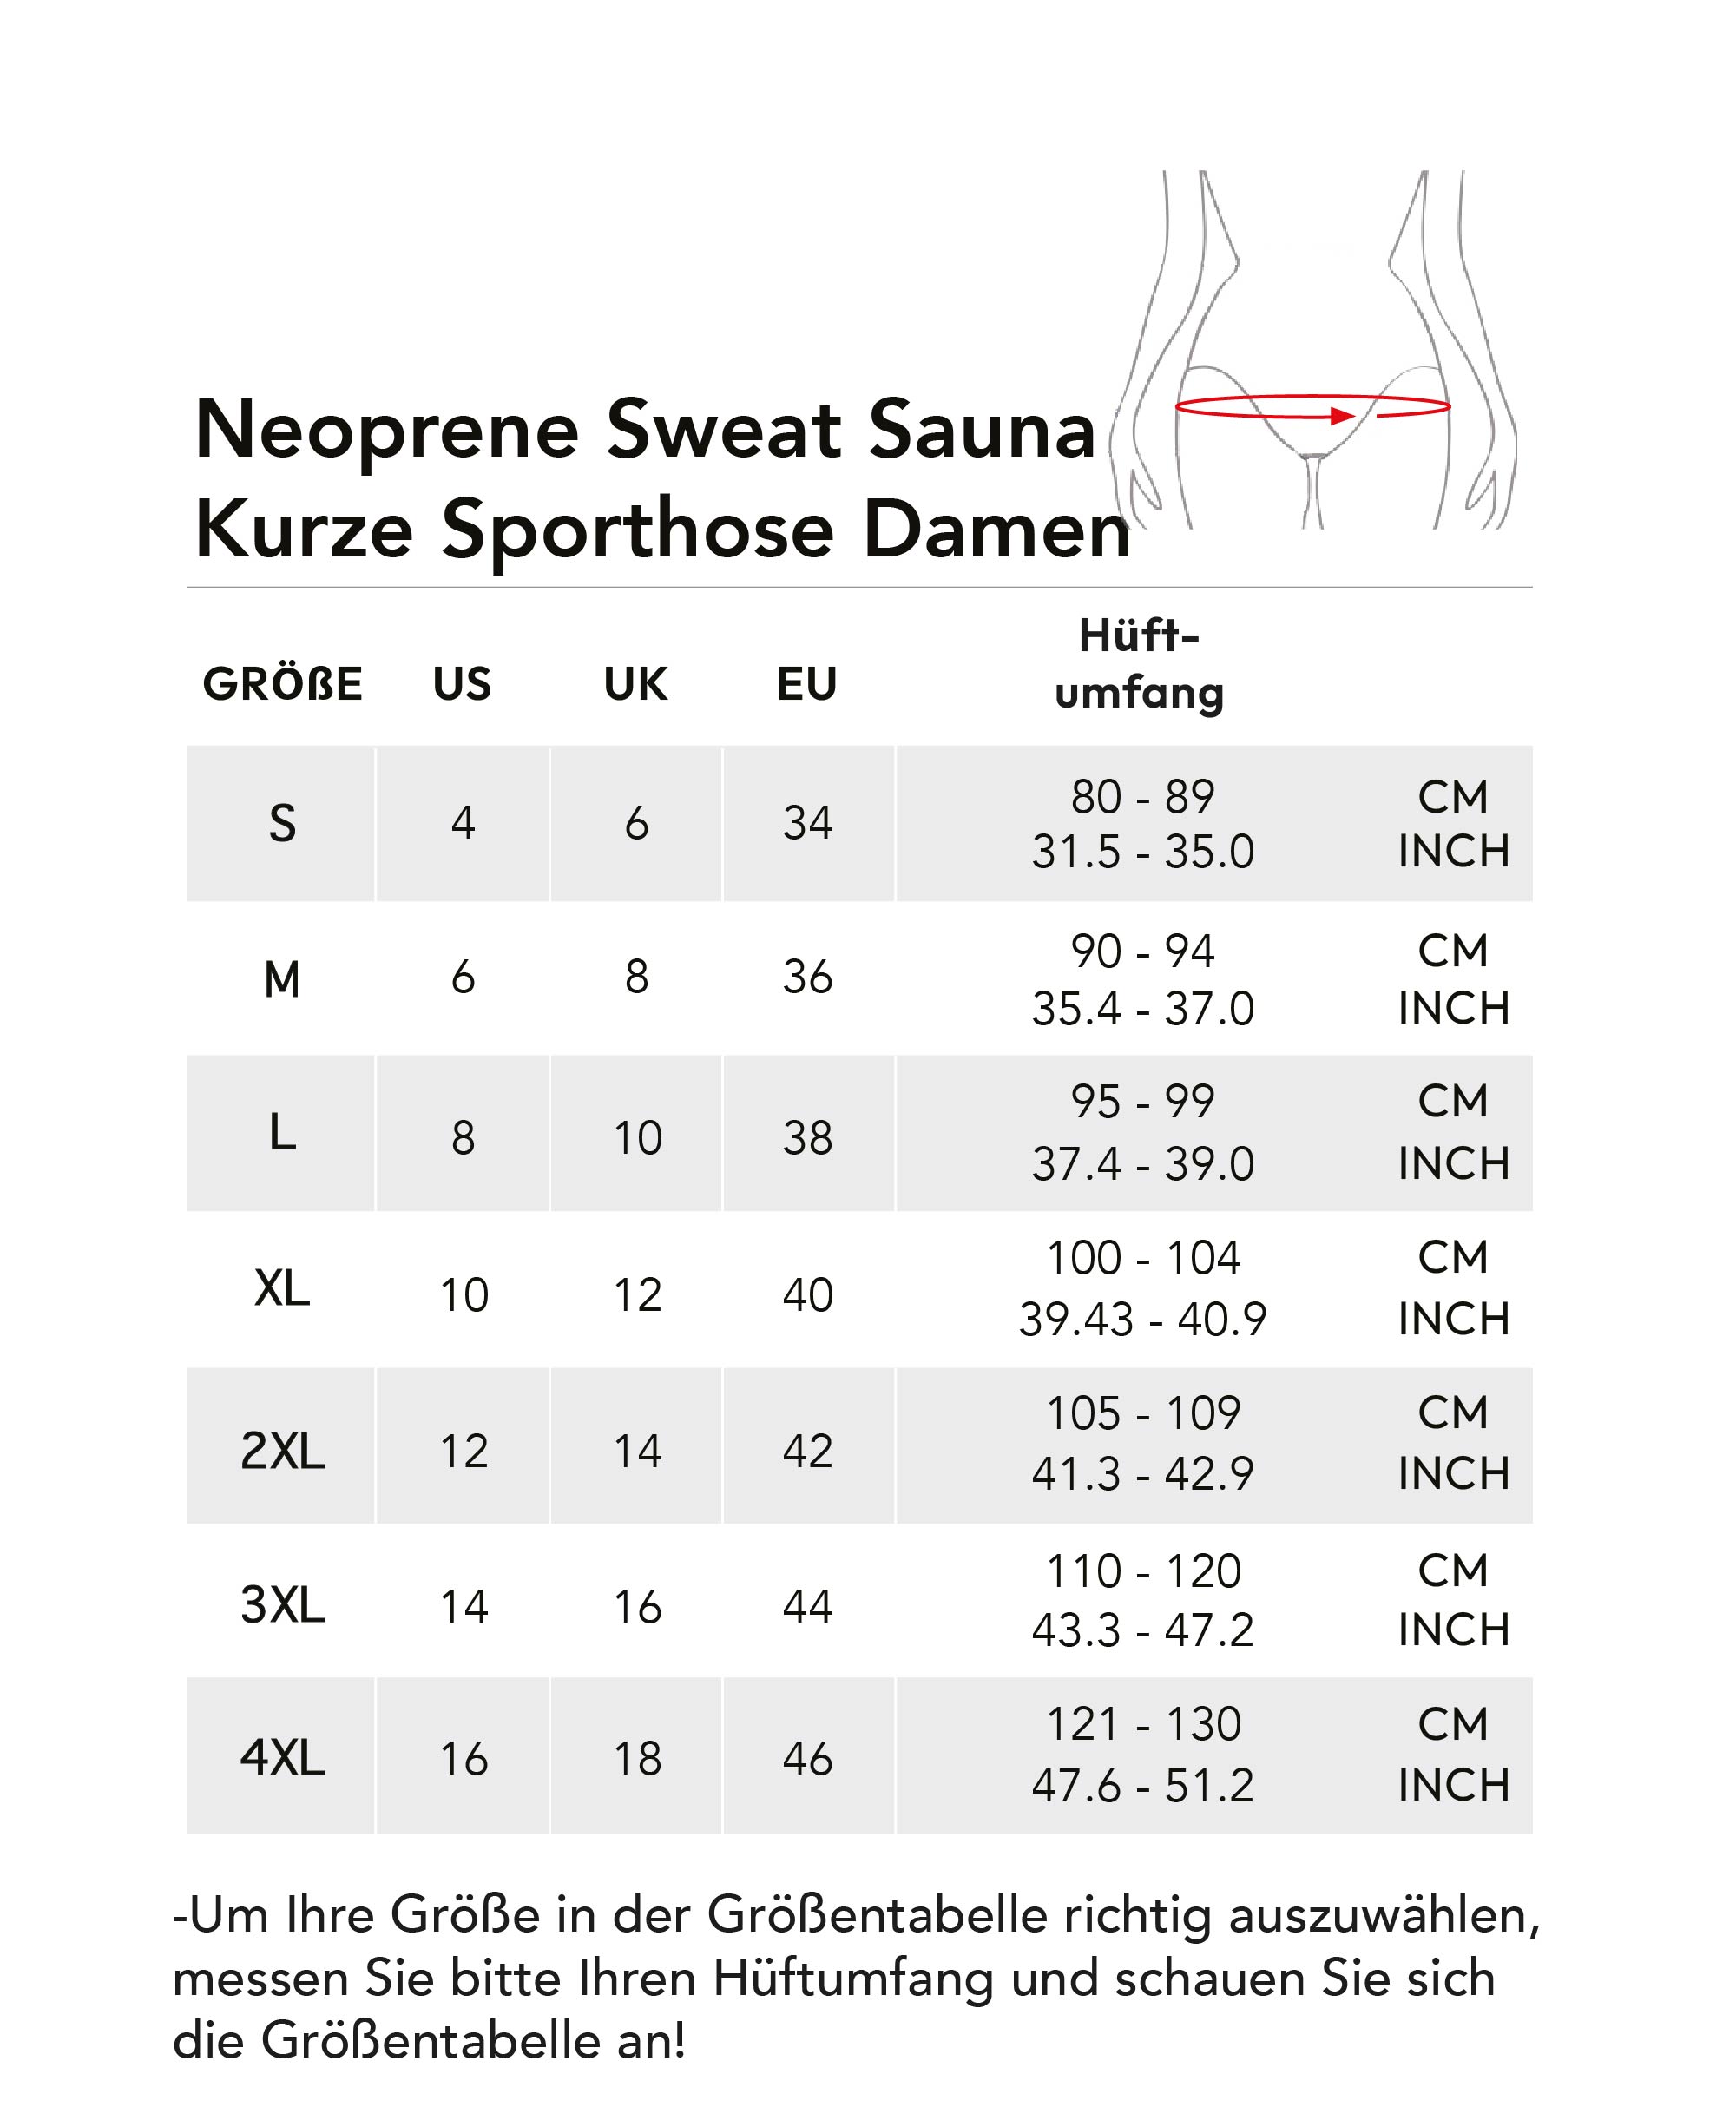 neoprene-sweat-sauna-kurze-sporthose-damen.jpg (262 KB)